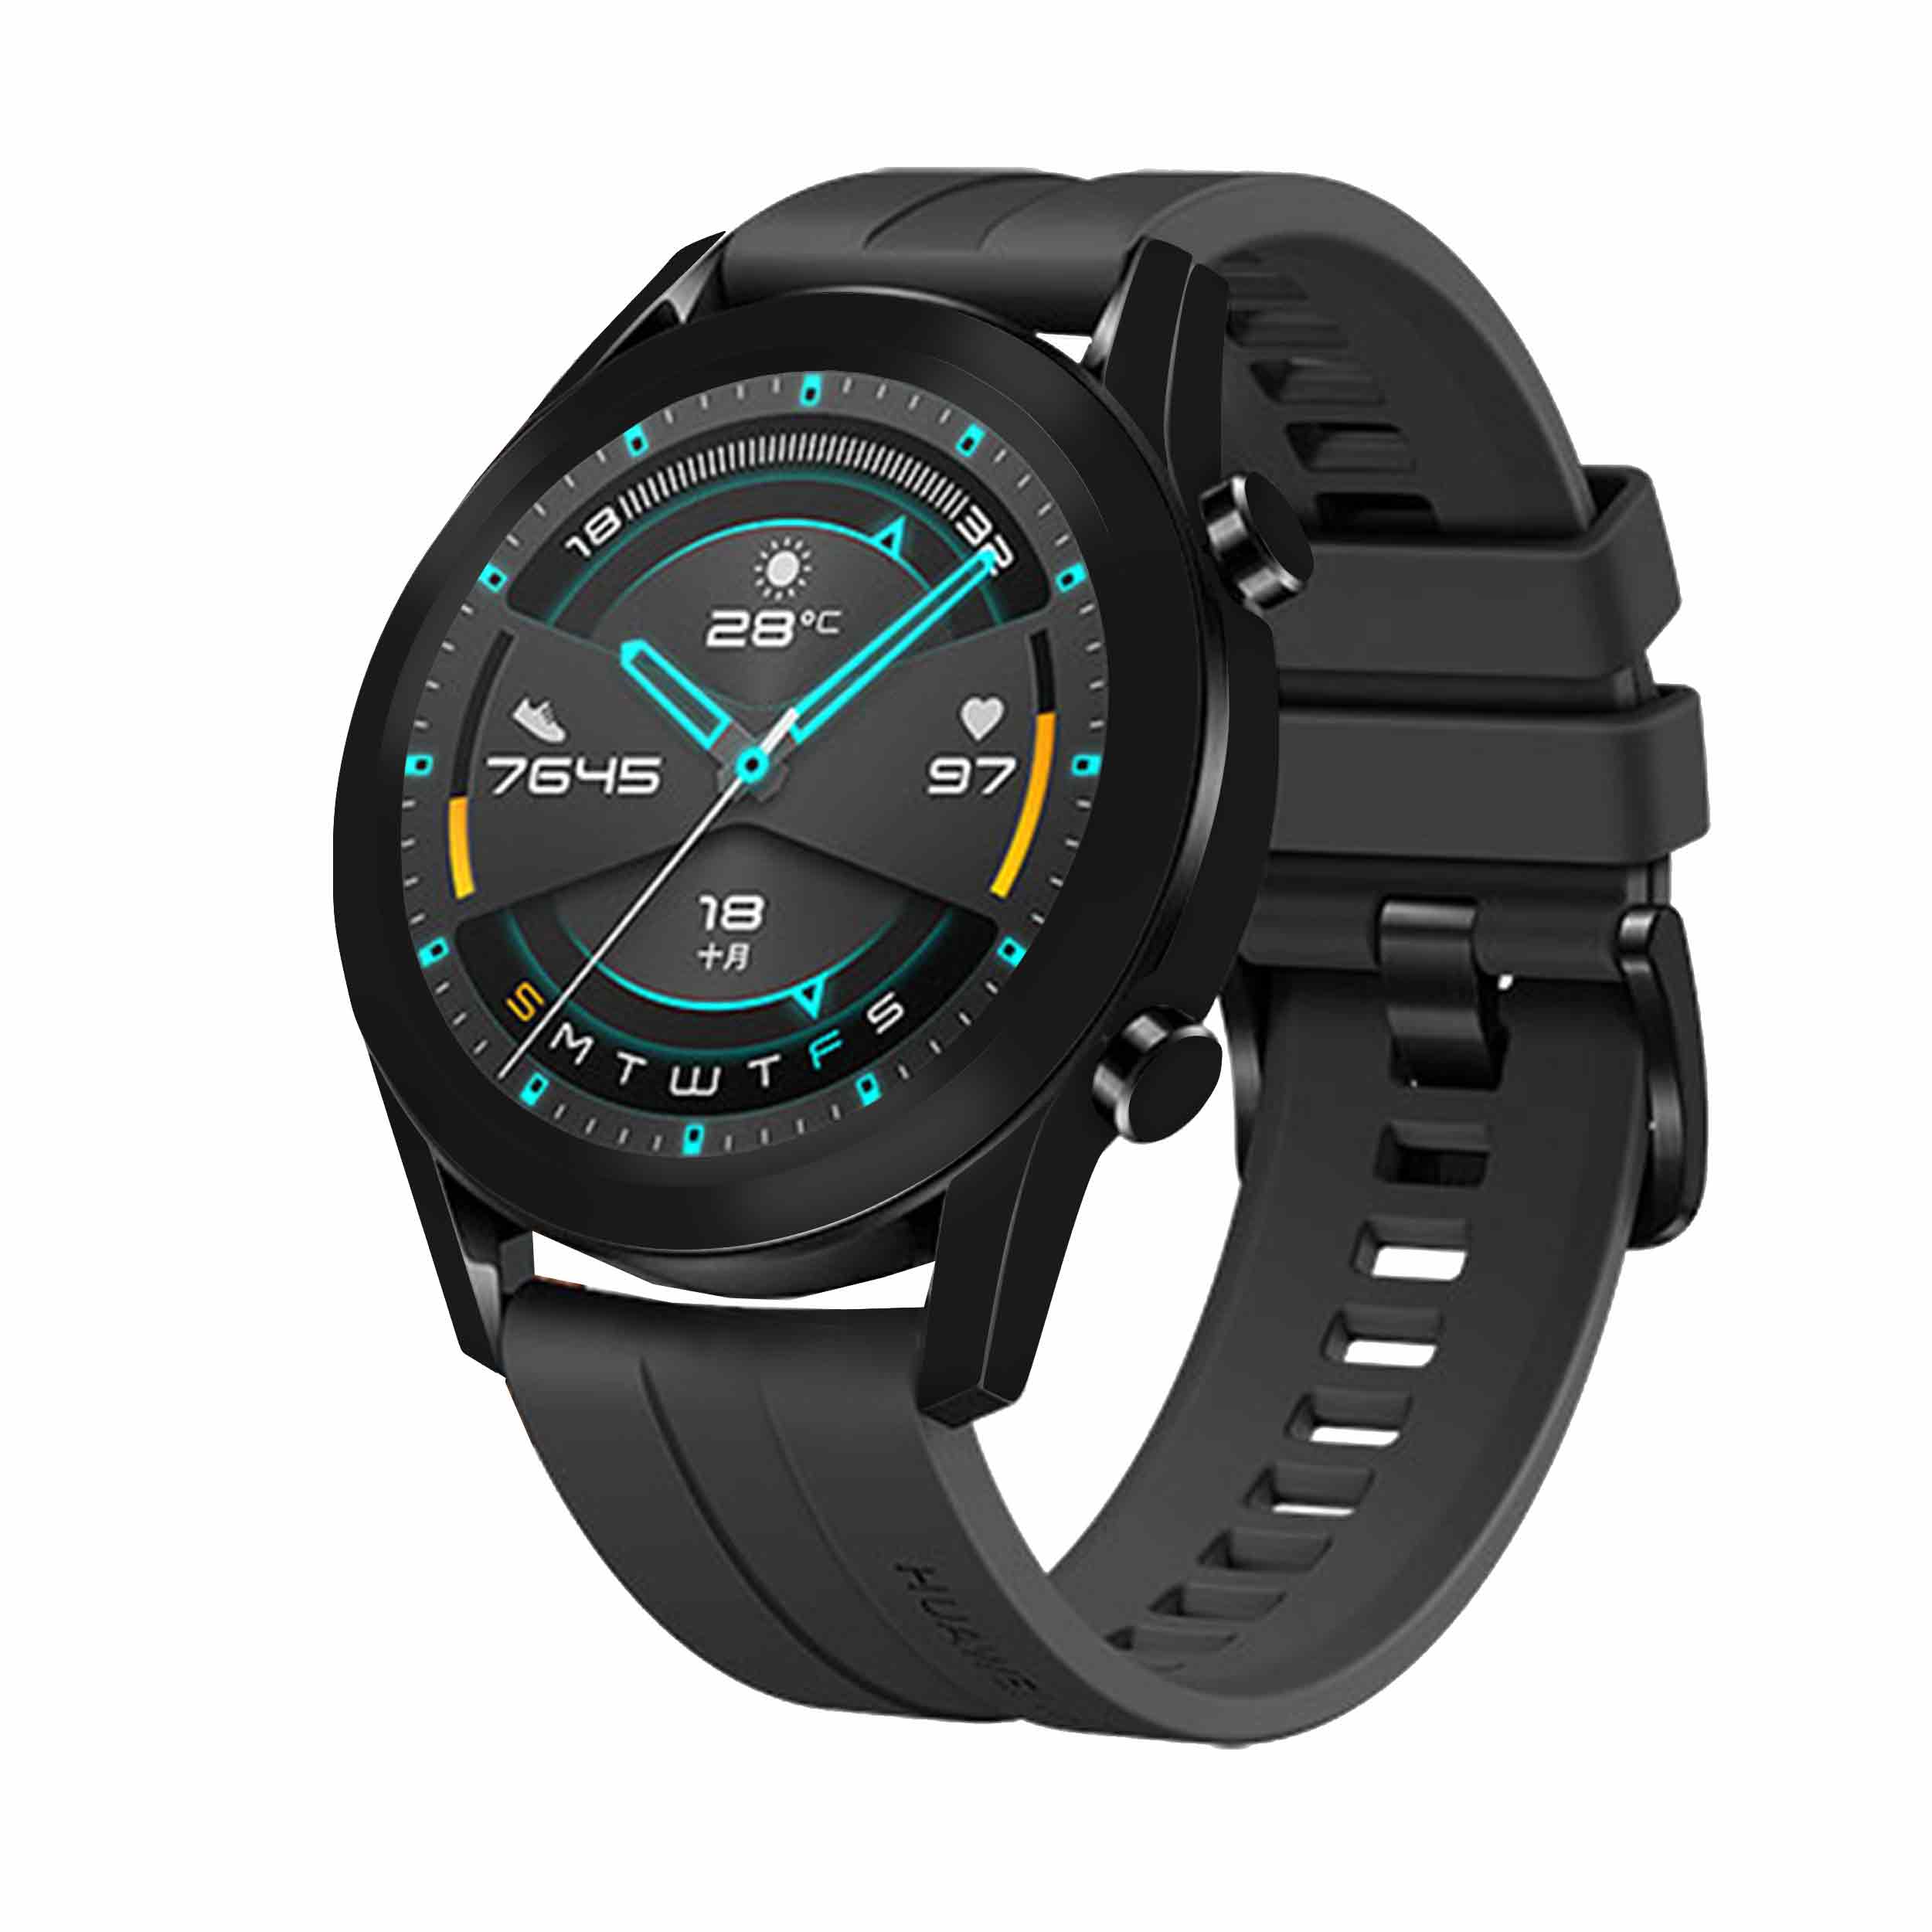 برچسب ماهوت طرح Matte-Black مناسب برای ساعت هوشمند هوآوی Watch GT2